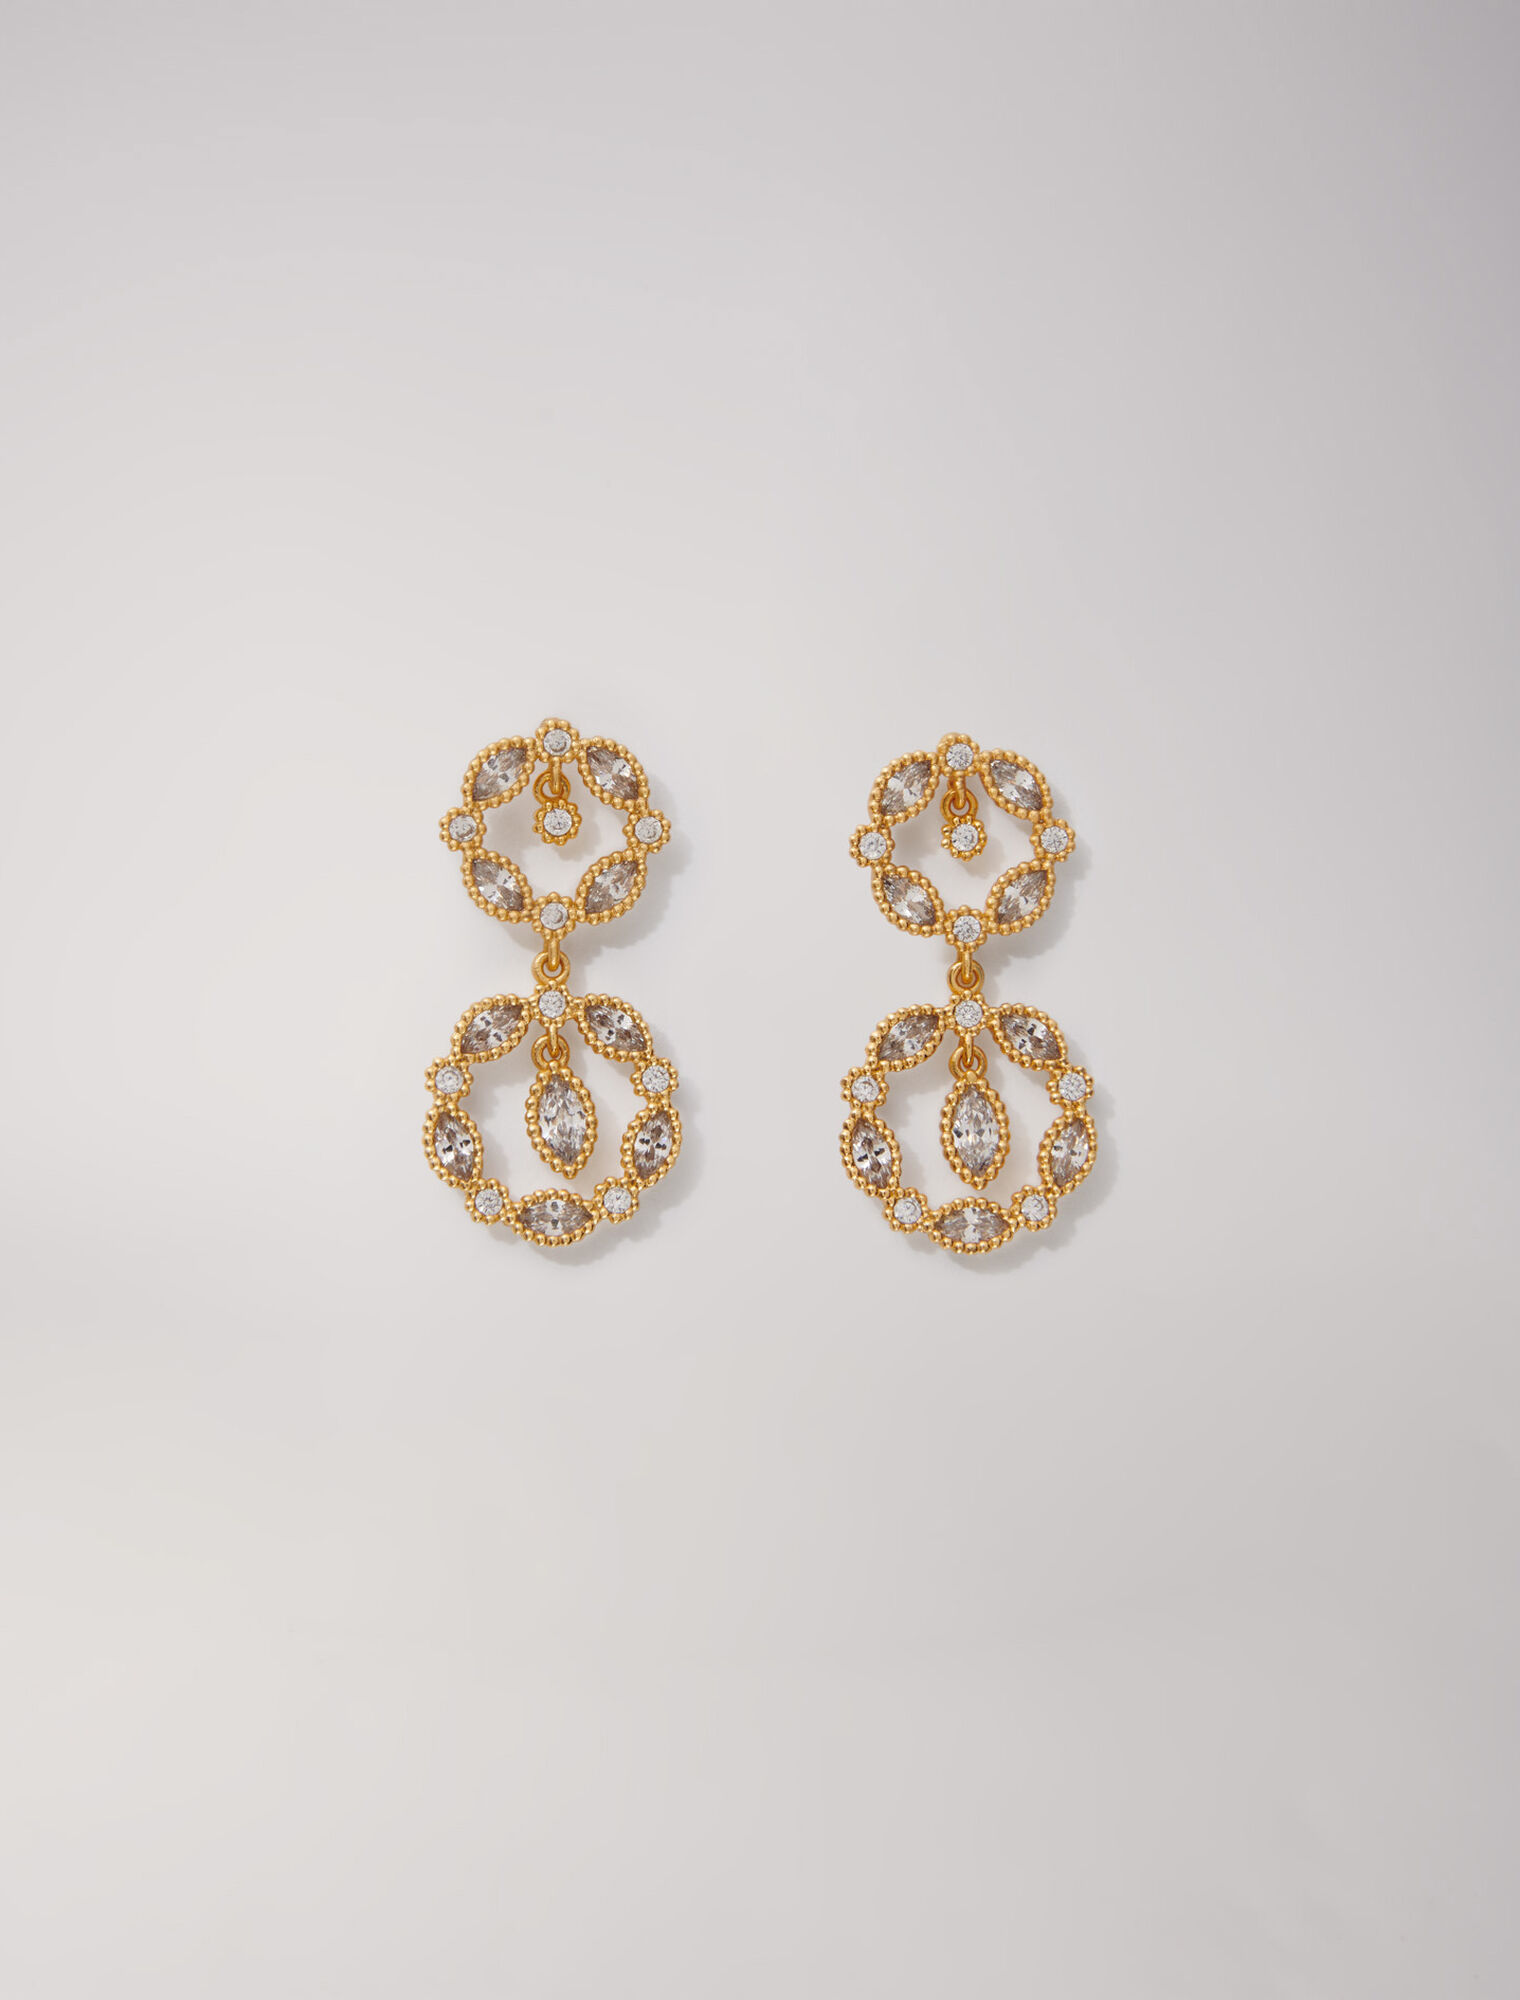 Rhinestone pendant earrings